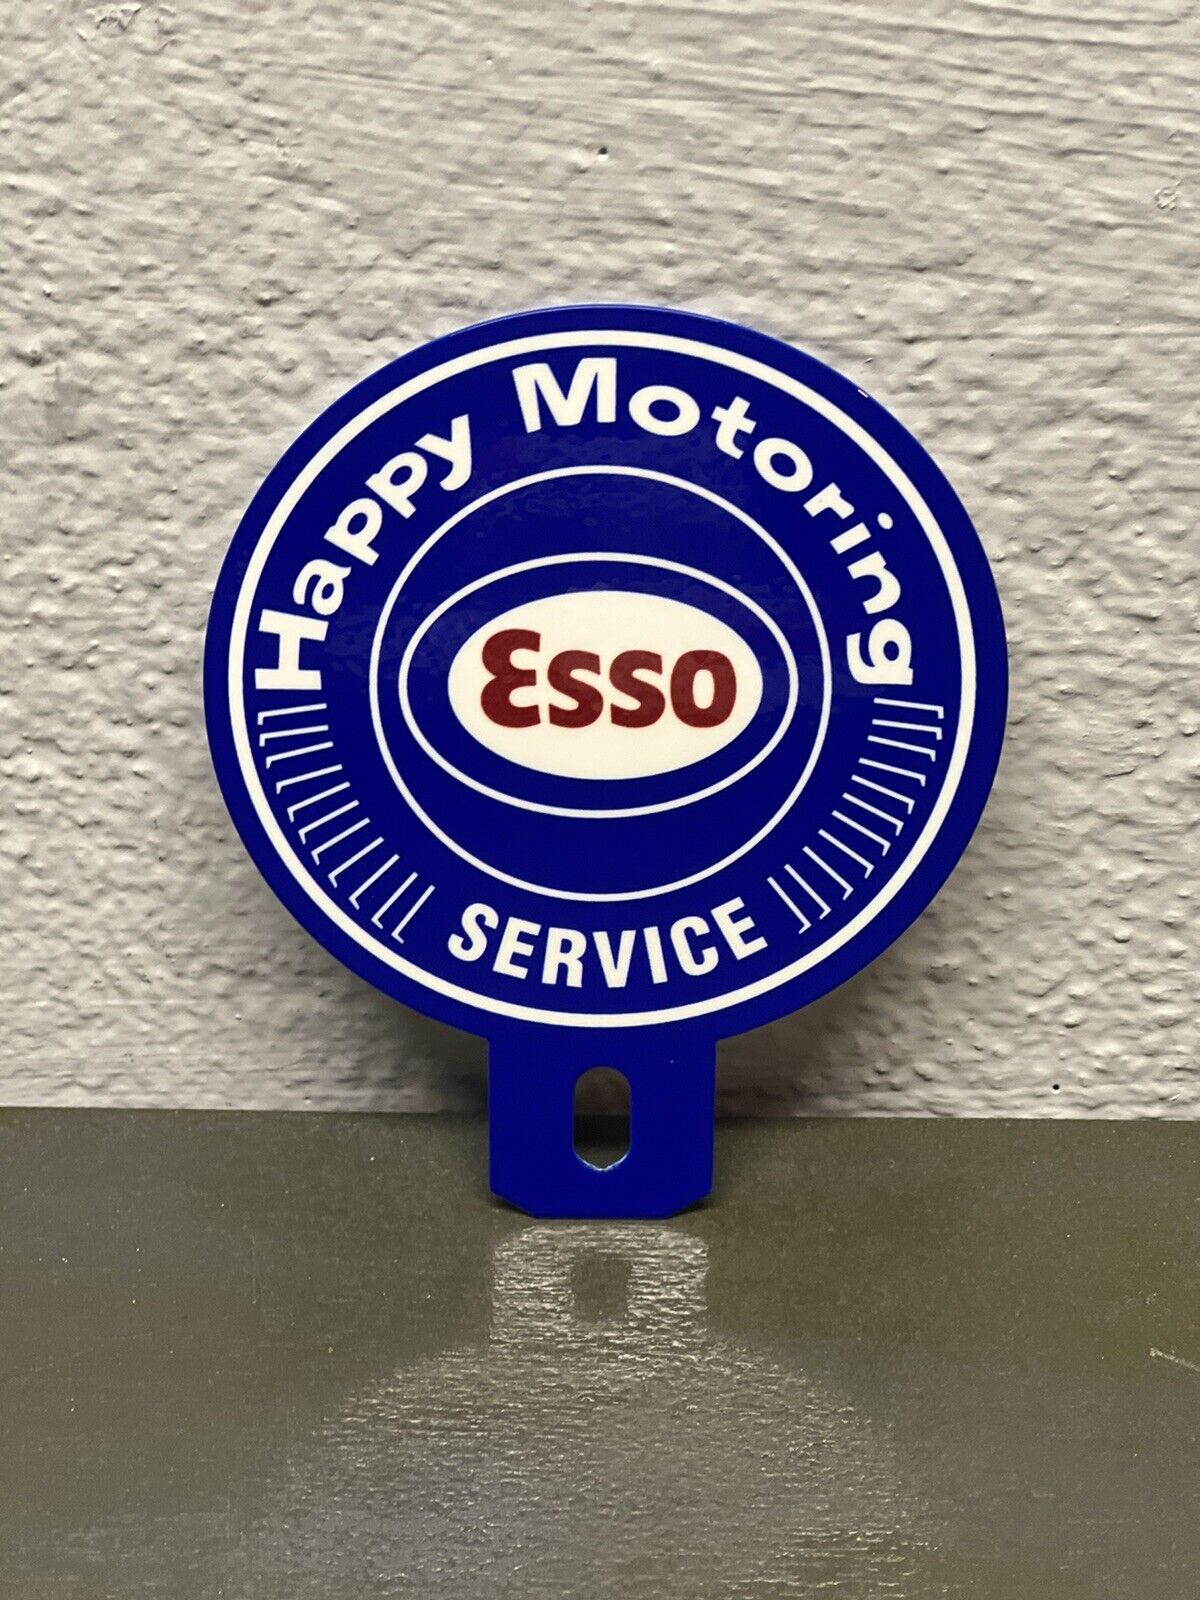 ESSO Happy Motoring Service Metal Plate Topper Gas Oil Sales Auto Garage Diesel